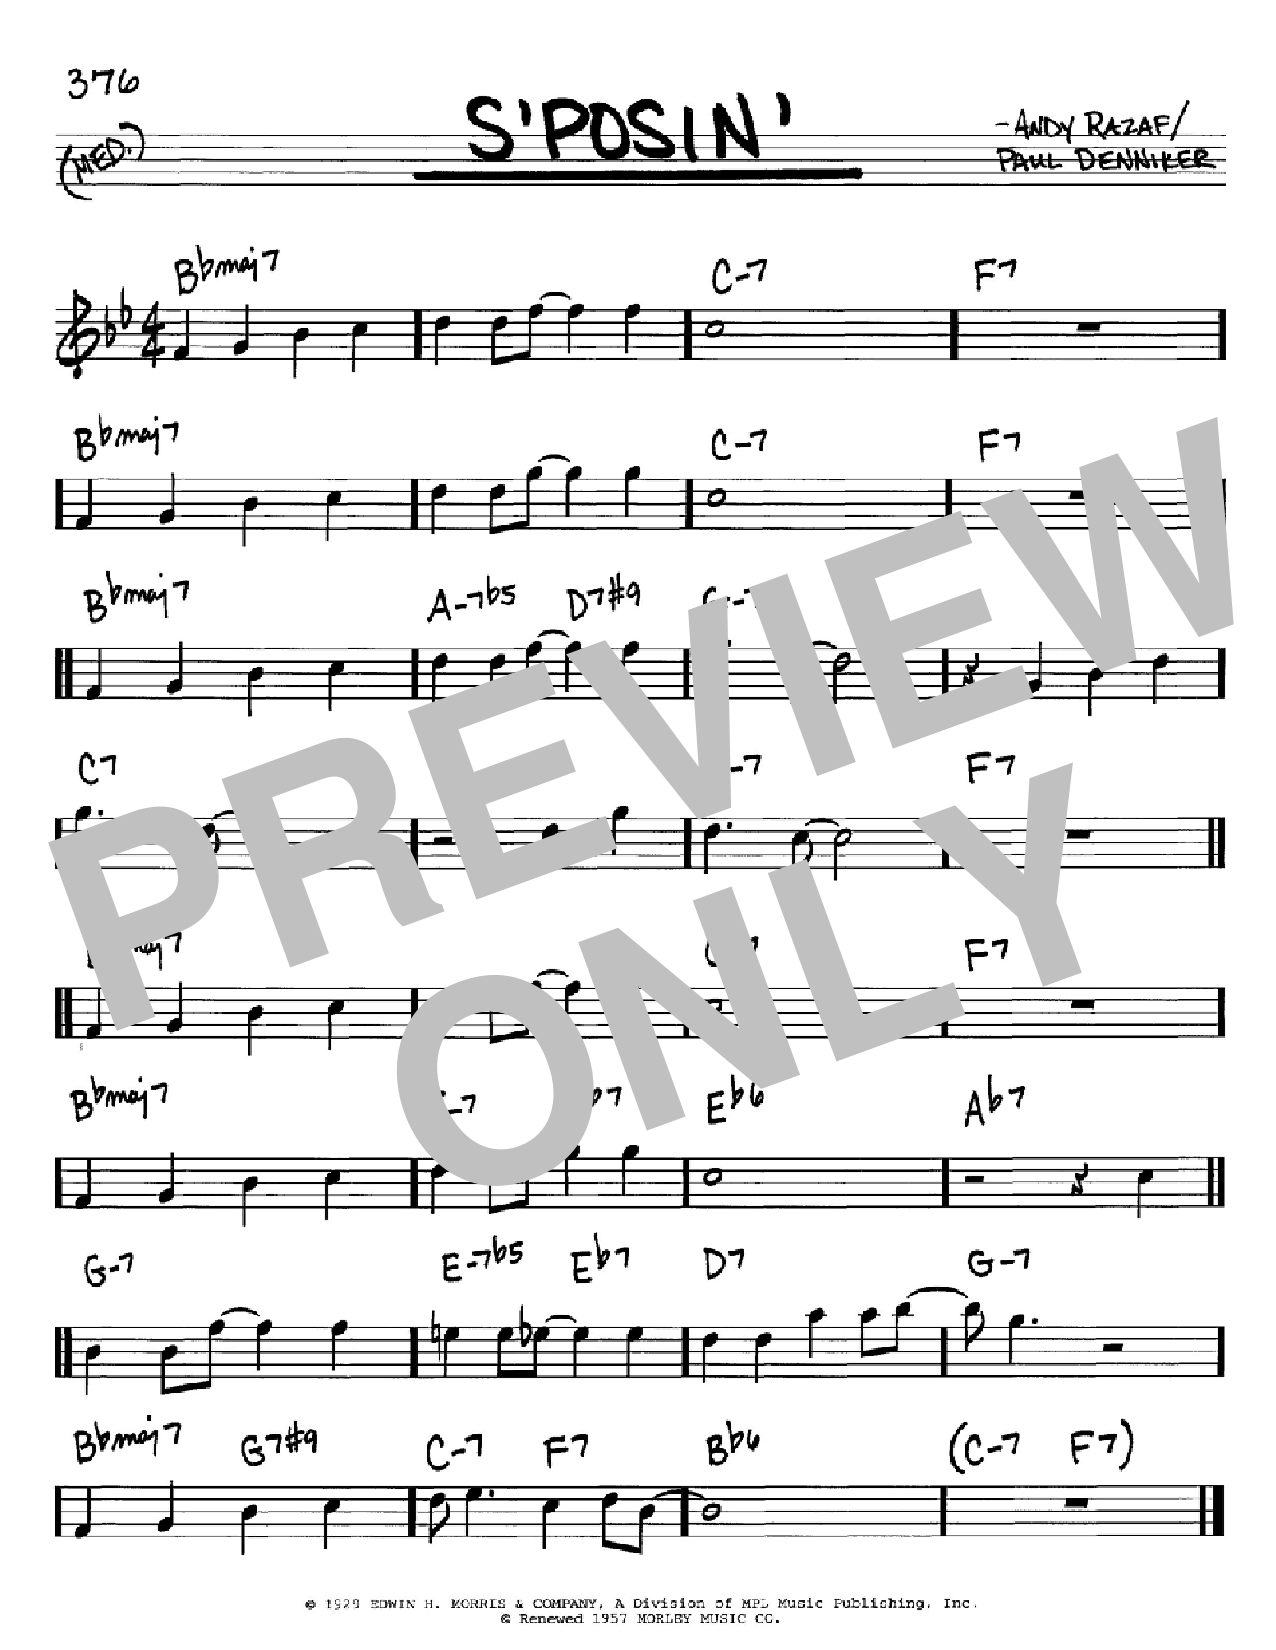 Frank Sinatra S'posin' Sheet Music Notes & Chords for Real Book - Melody, Lyrics & Chords - C Instruments - Download or Print PDF